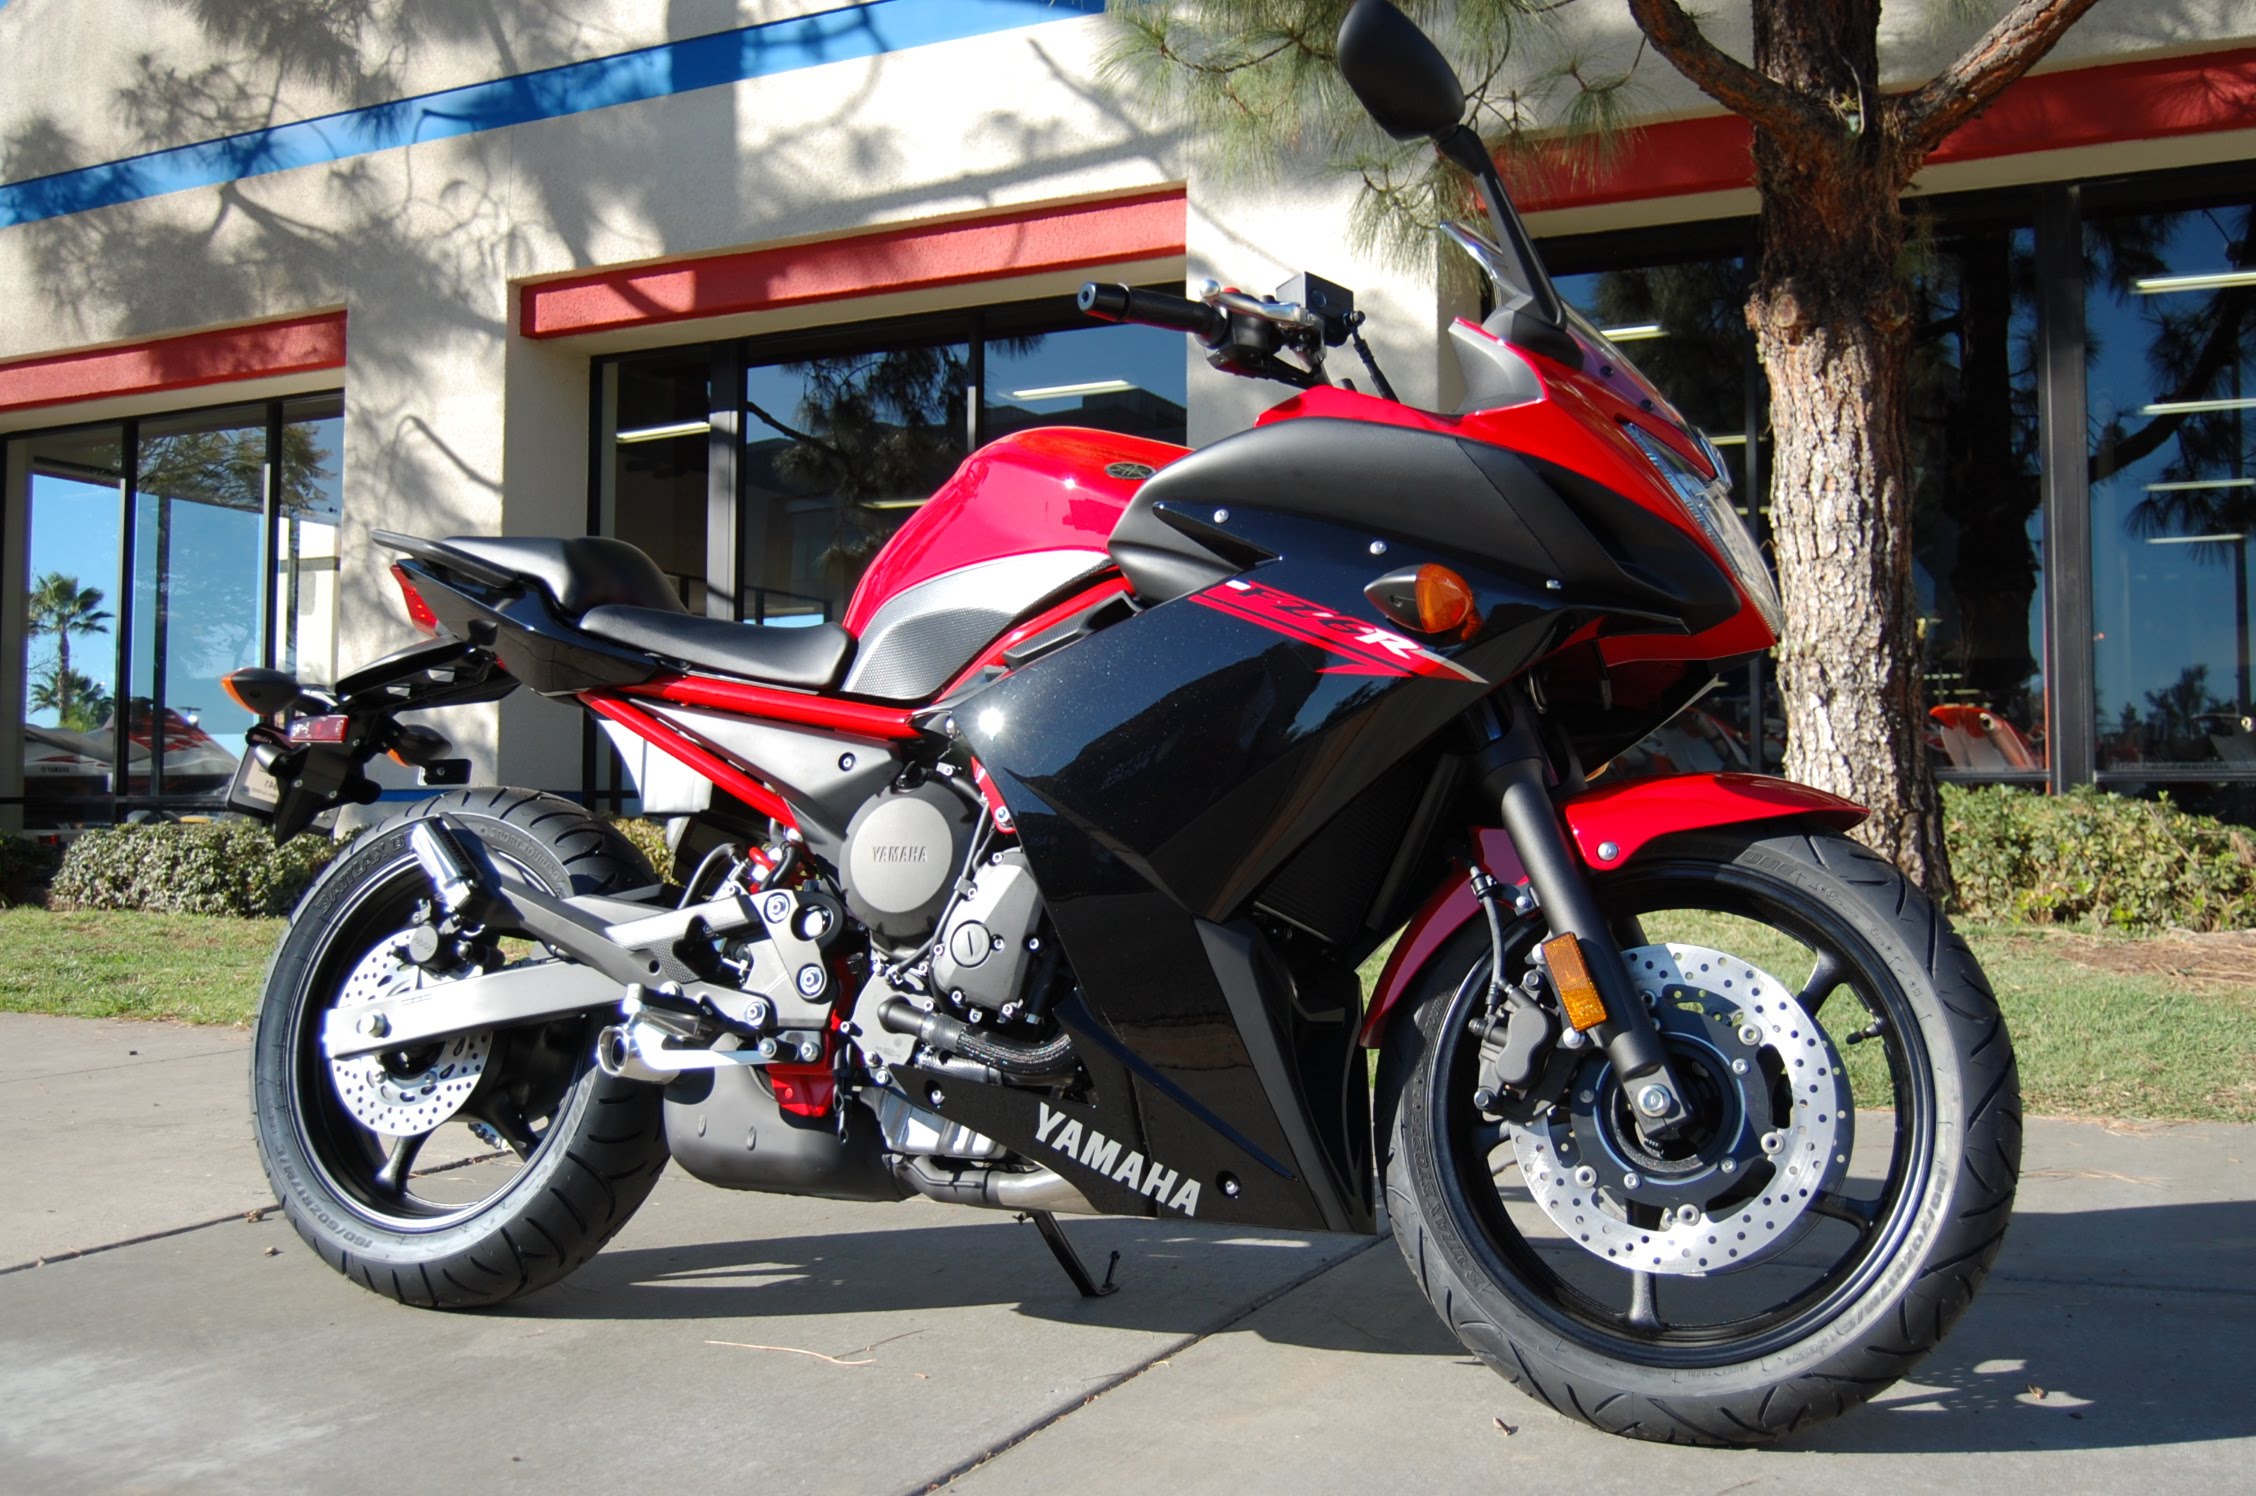 Yamaha fz6n | Motorcycles | Pinterest | Moto bike and Cars